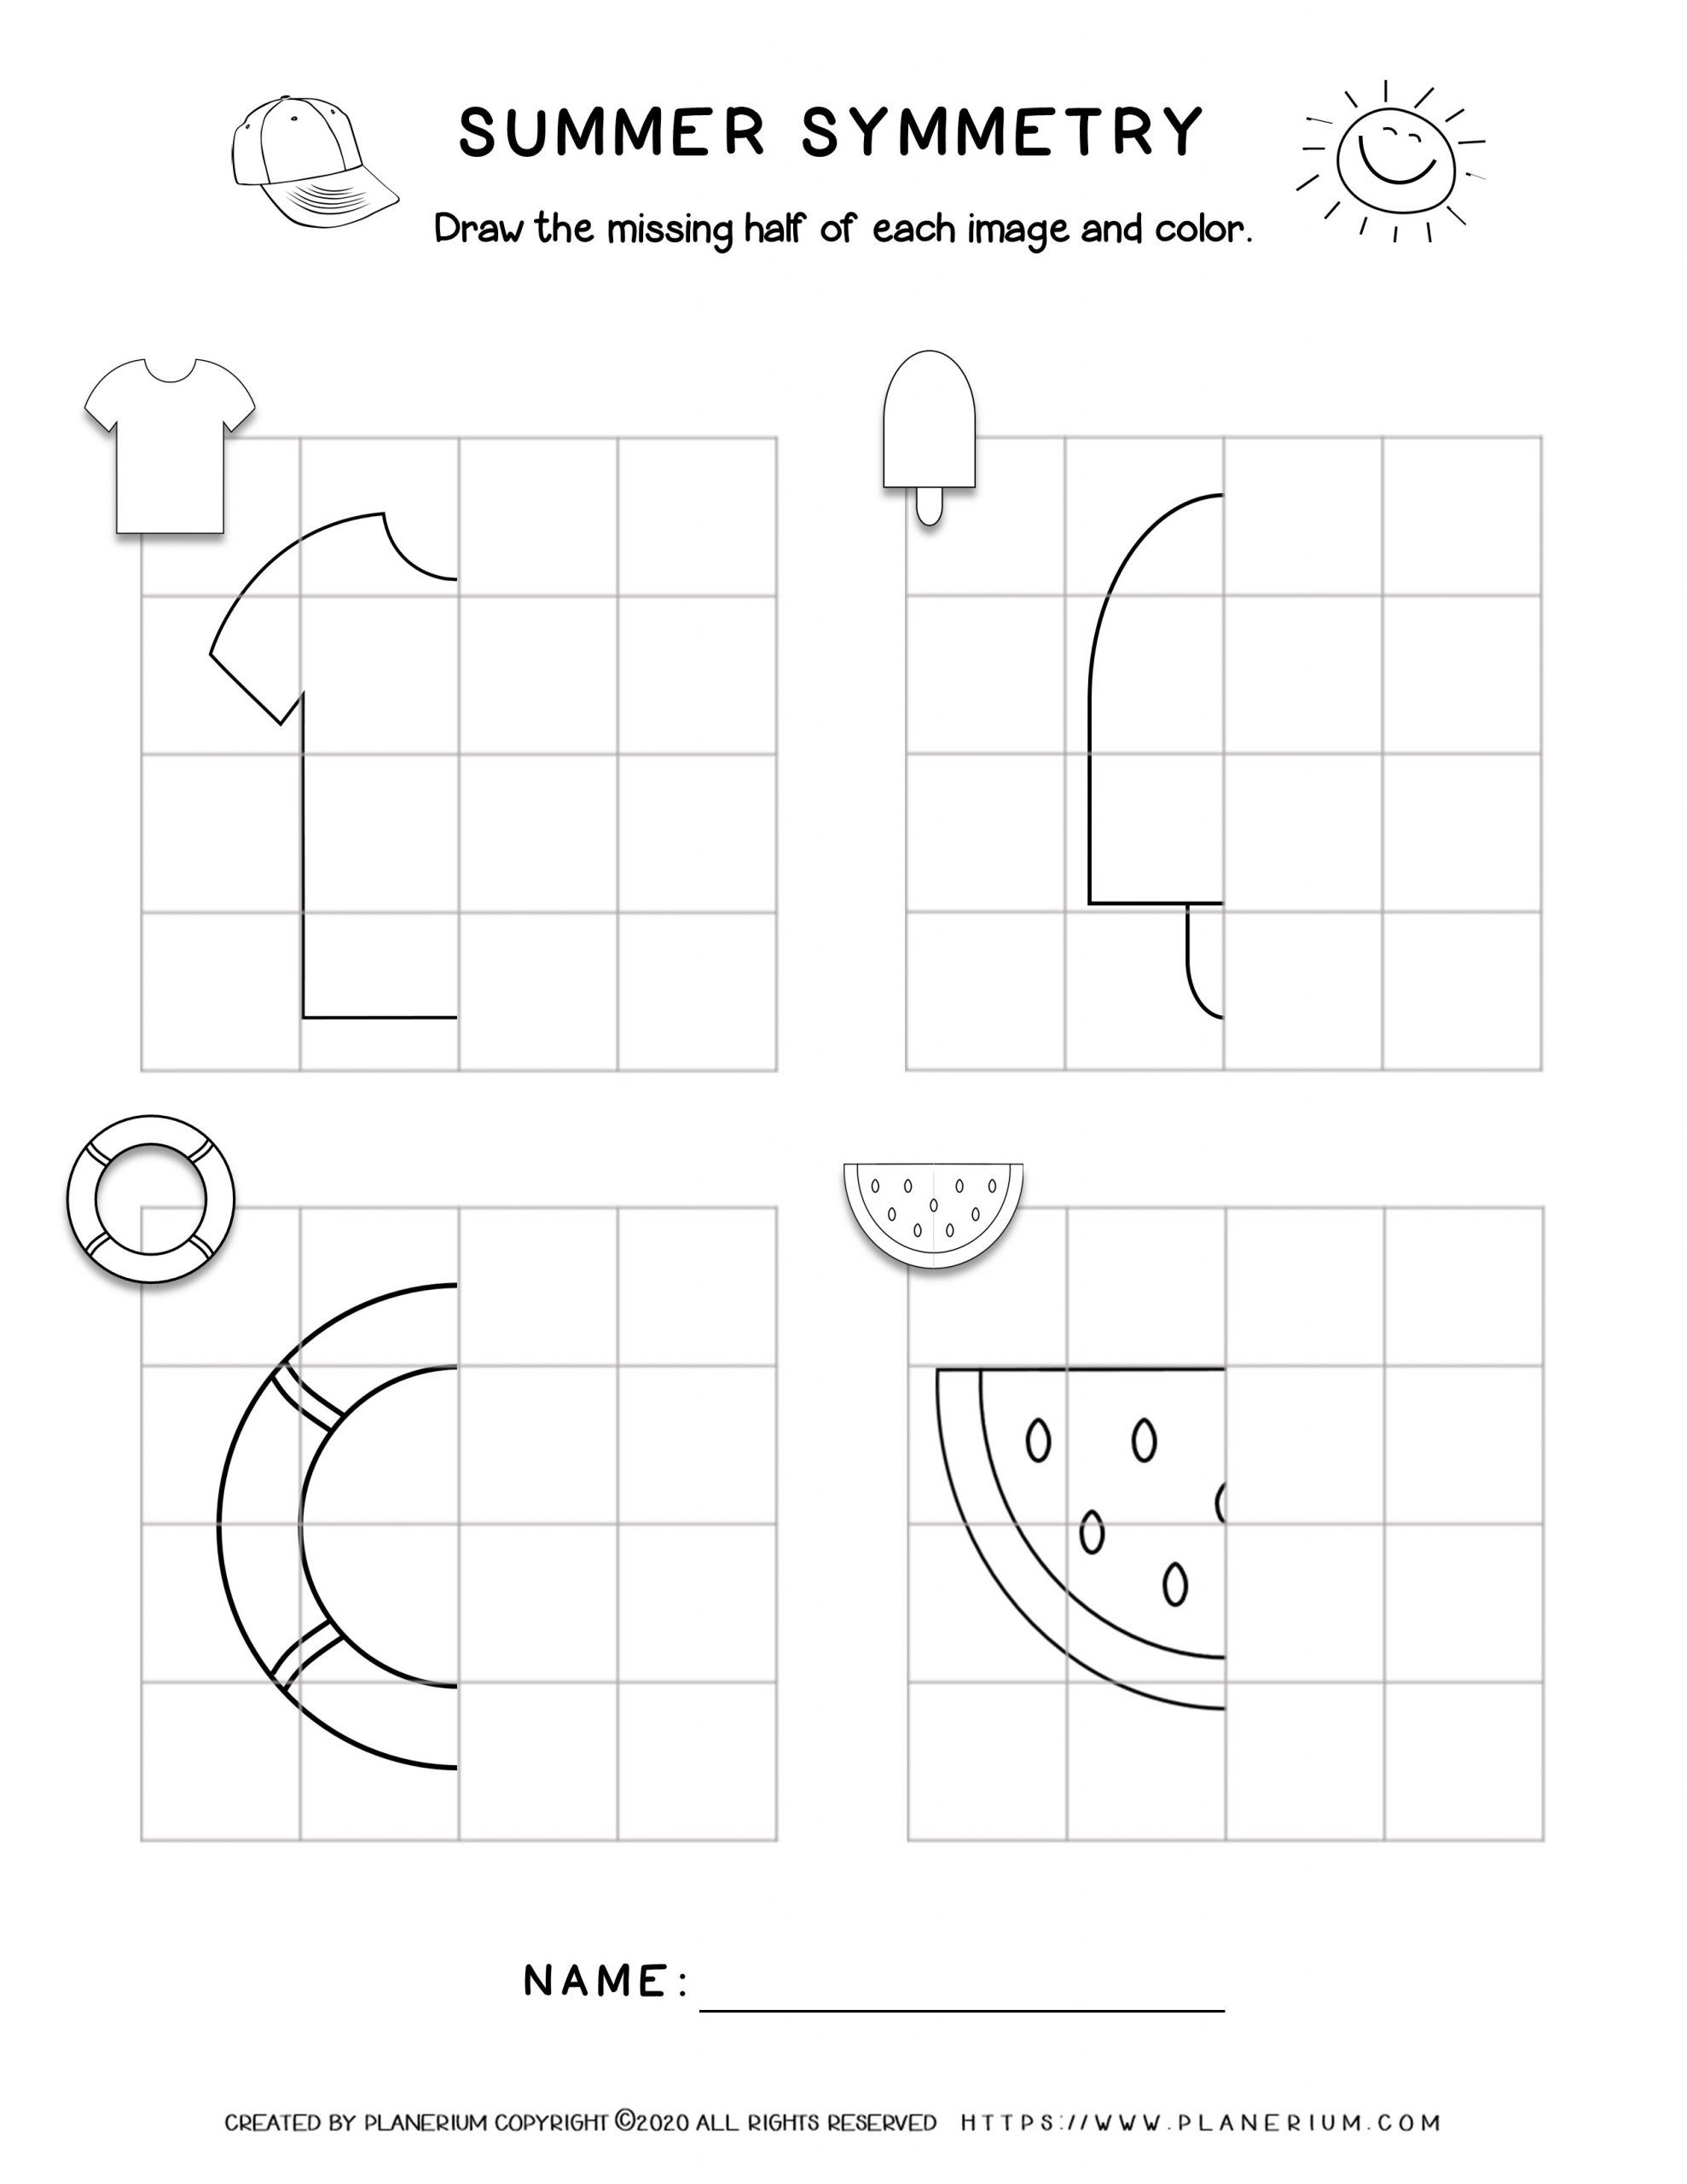 summer-worksheet-symmetry-drawing-planerium